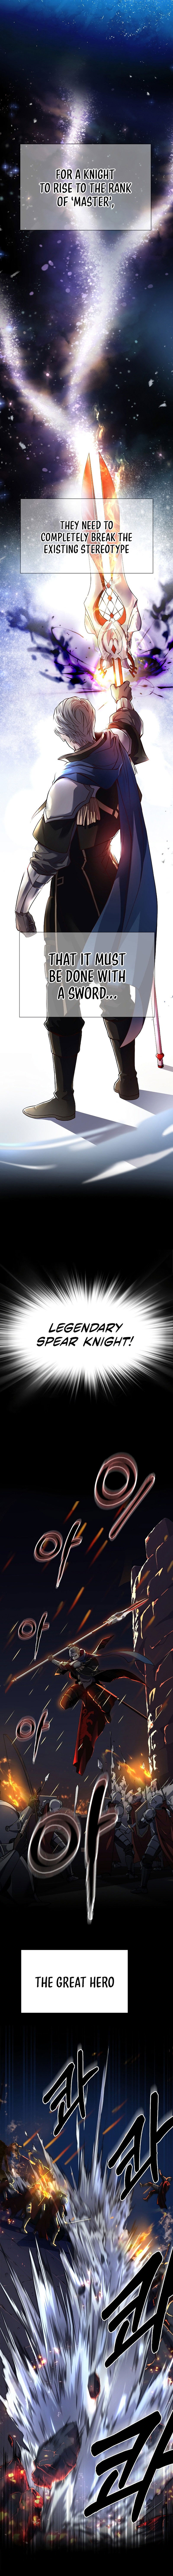 return-of-the-legendary-spear-knight-chap-1-1